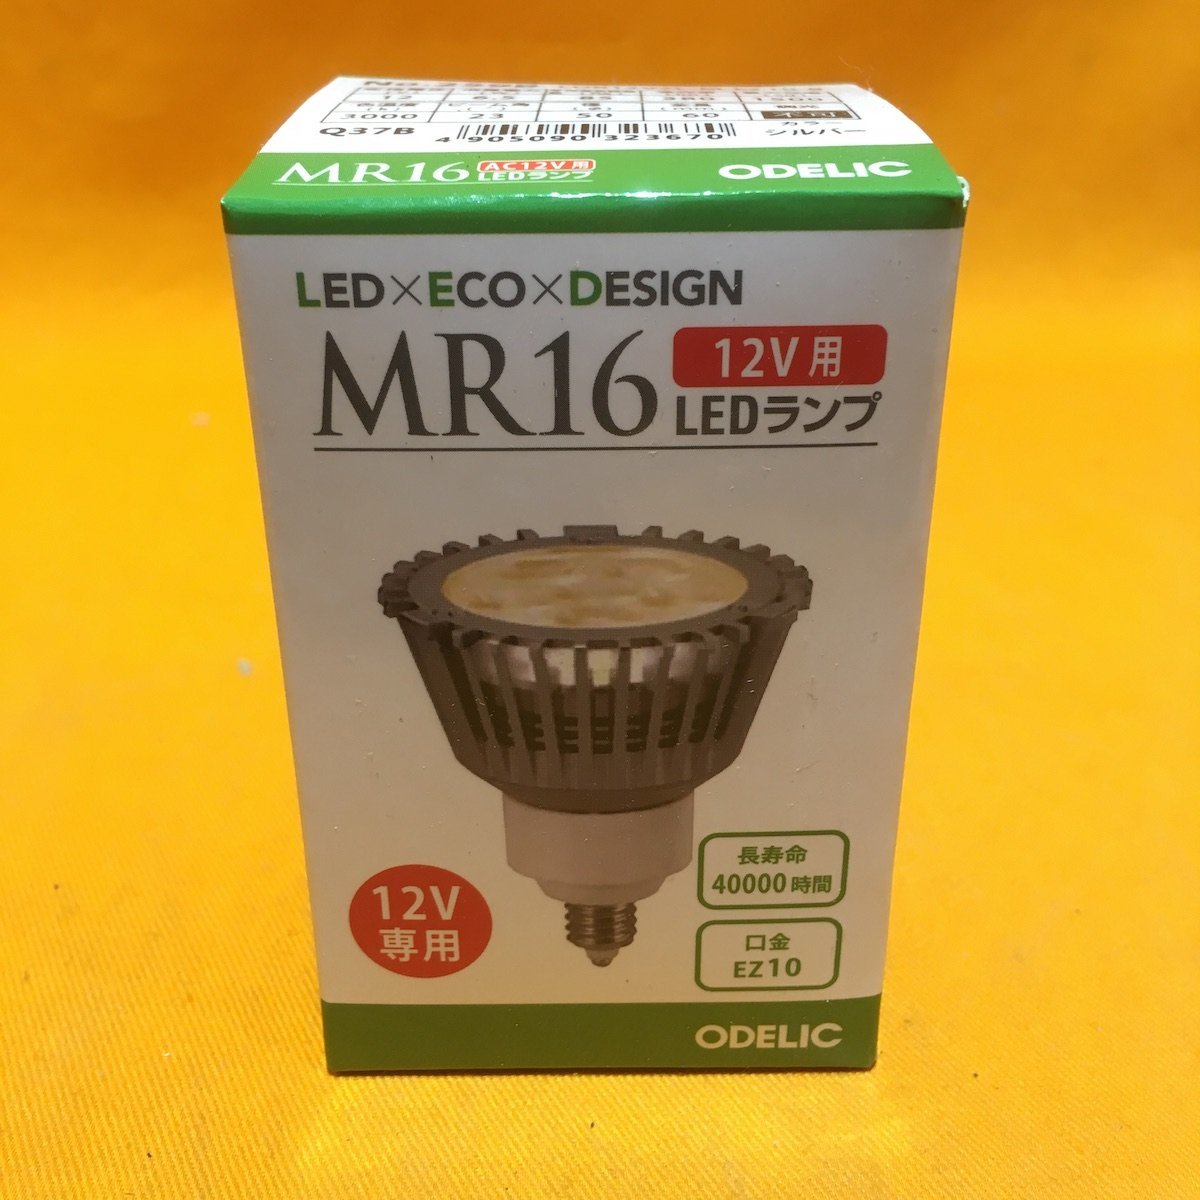 LEDダイクロハロゲン (10個セット) オーデリック No.259B LDR12V7L-M-EZ10-B 口金EZ10 MR16 12V用 サテイゴー_画像3